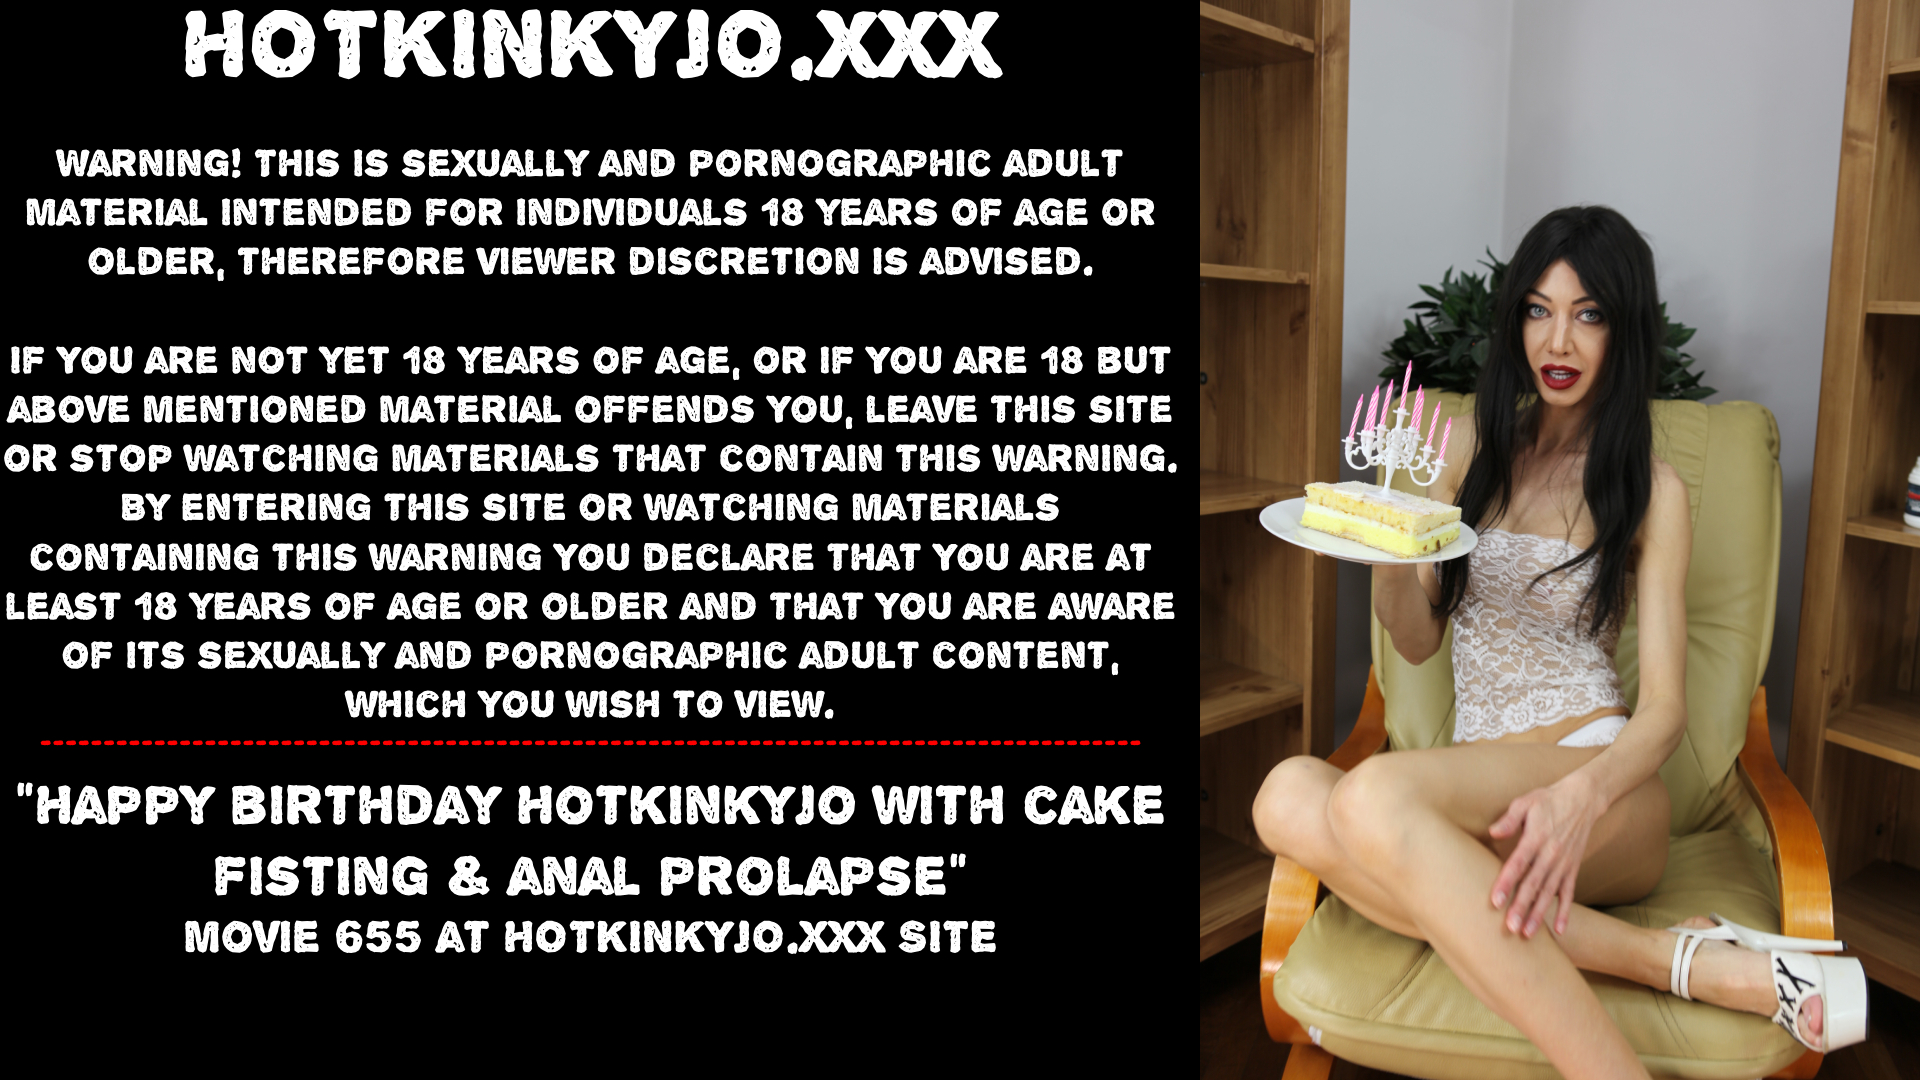 Happy birthday Hotkinkyjo with cake fisting & anal prolapse. 